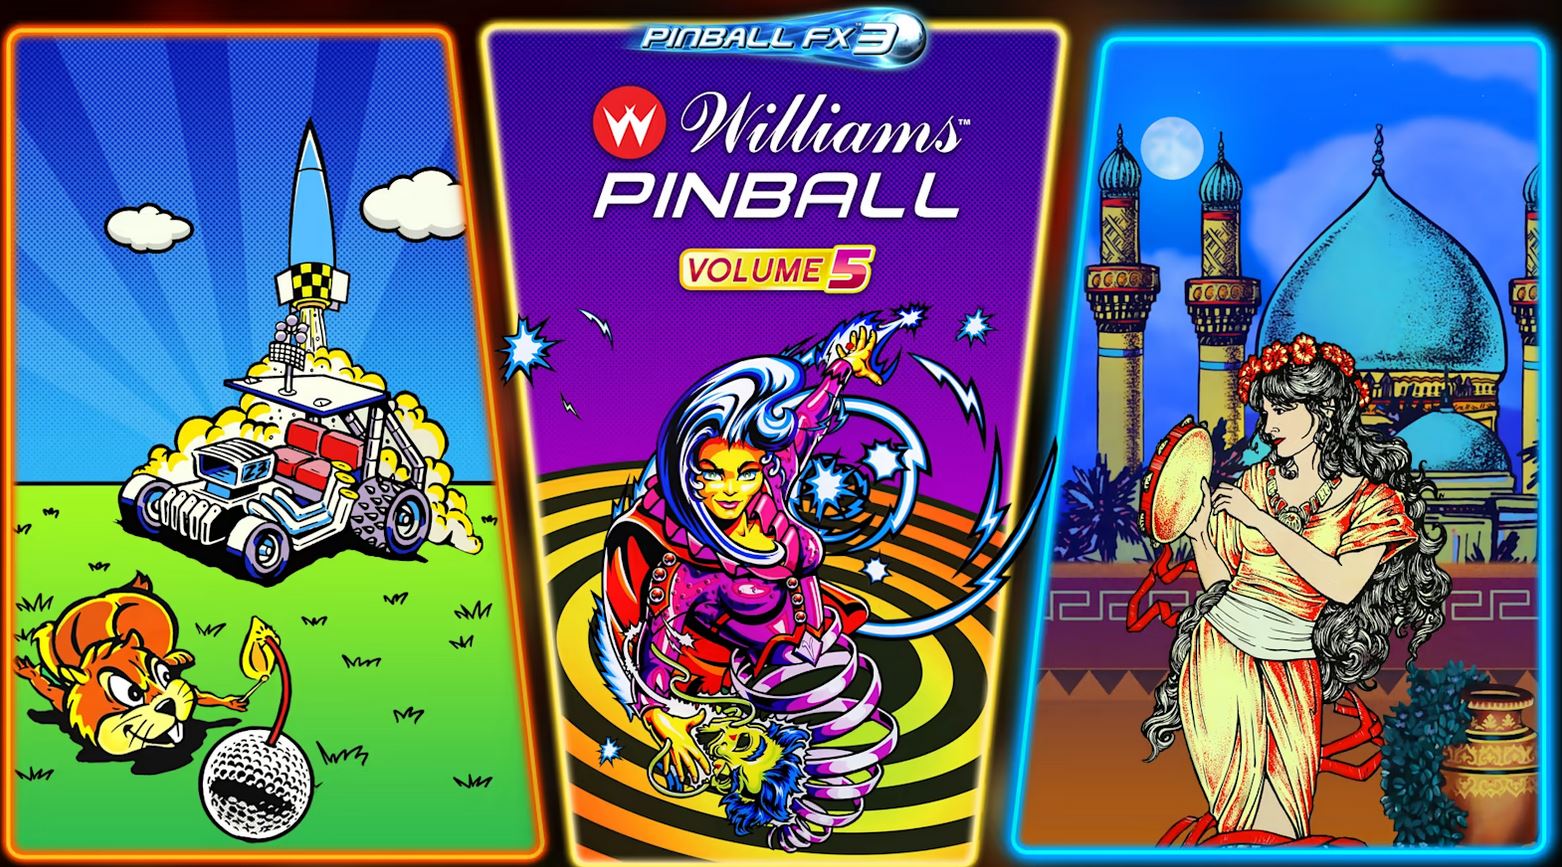 Pinball FX3 - Williams™ Pinball: Volume 5 - Nintendo Switch Digital Download - $3.49